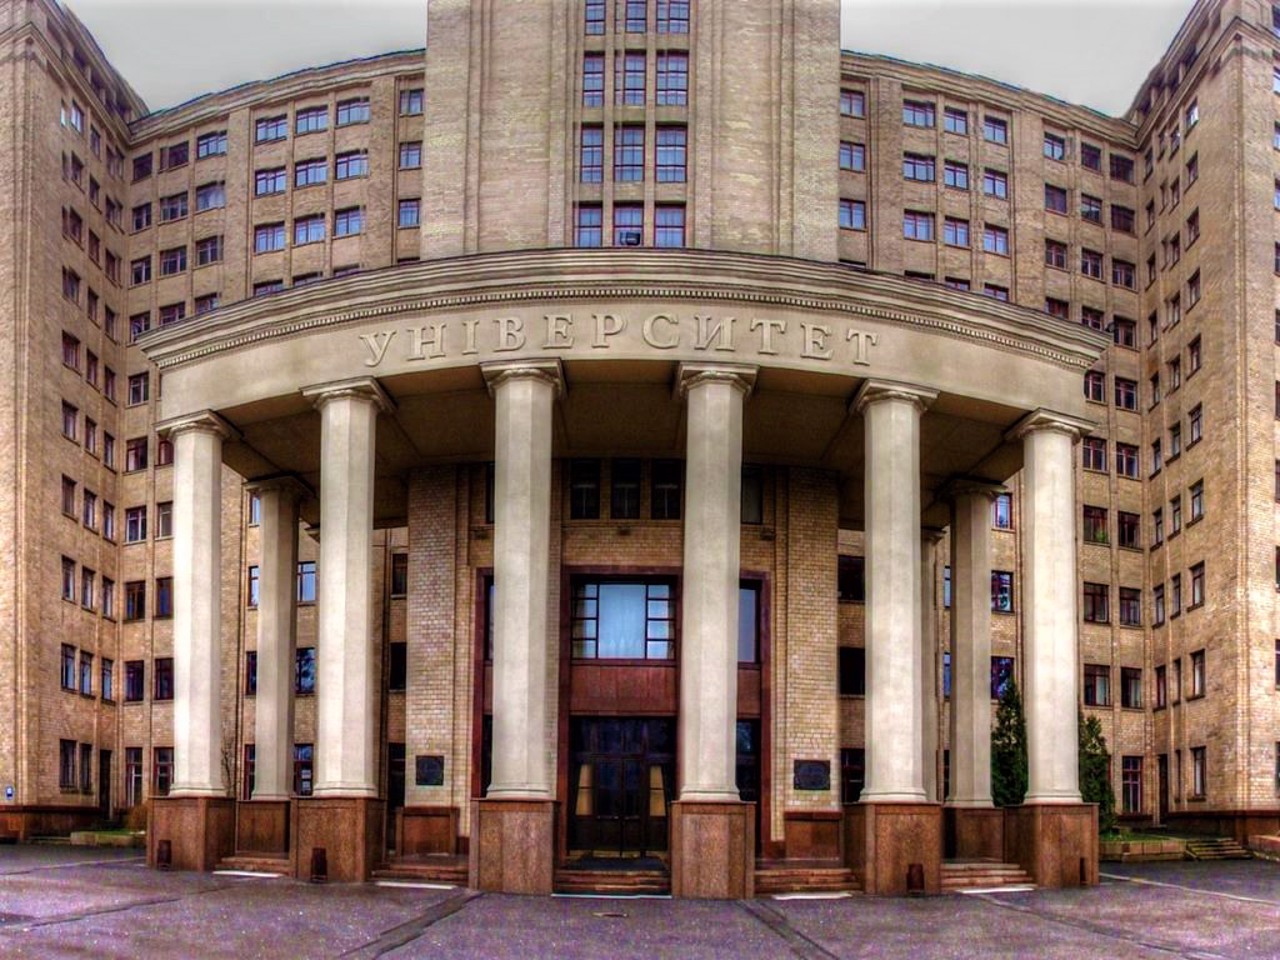 Kharkiv Karazin University